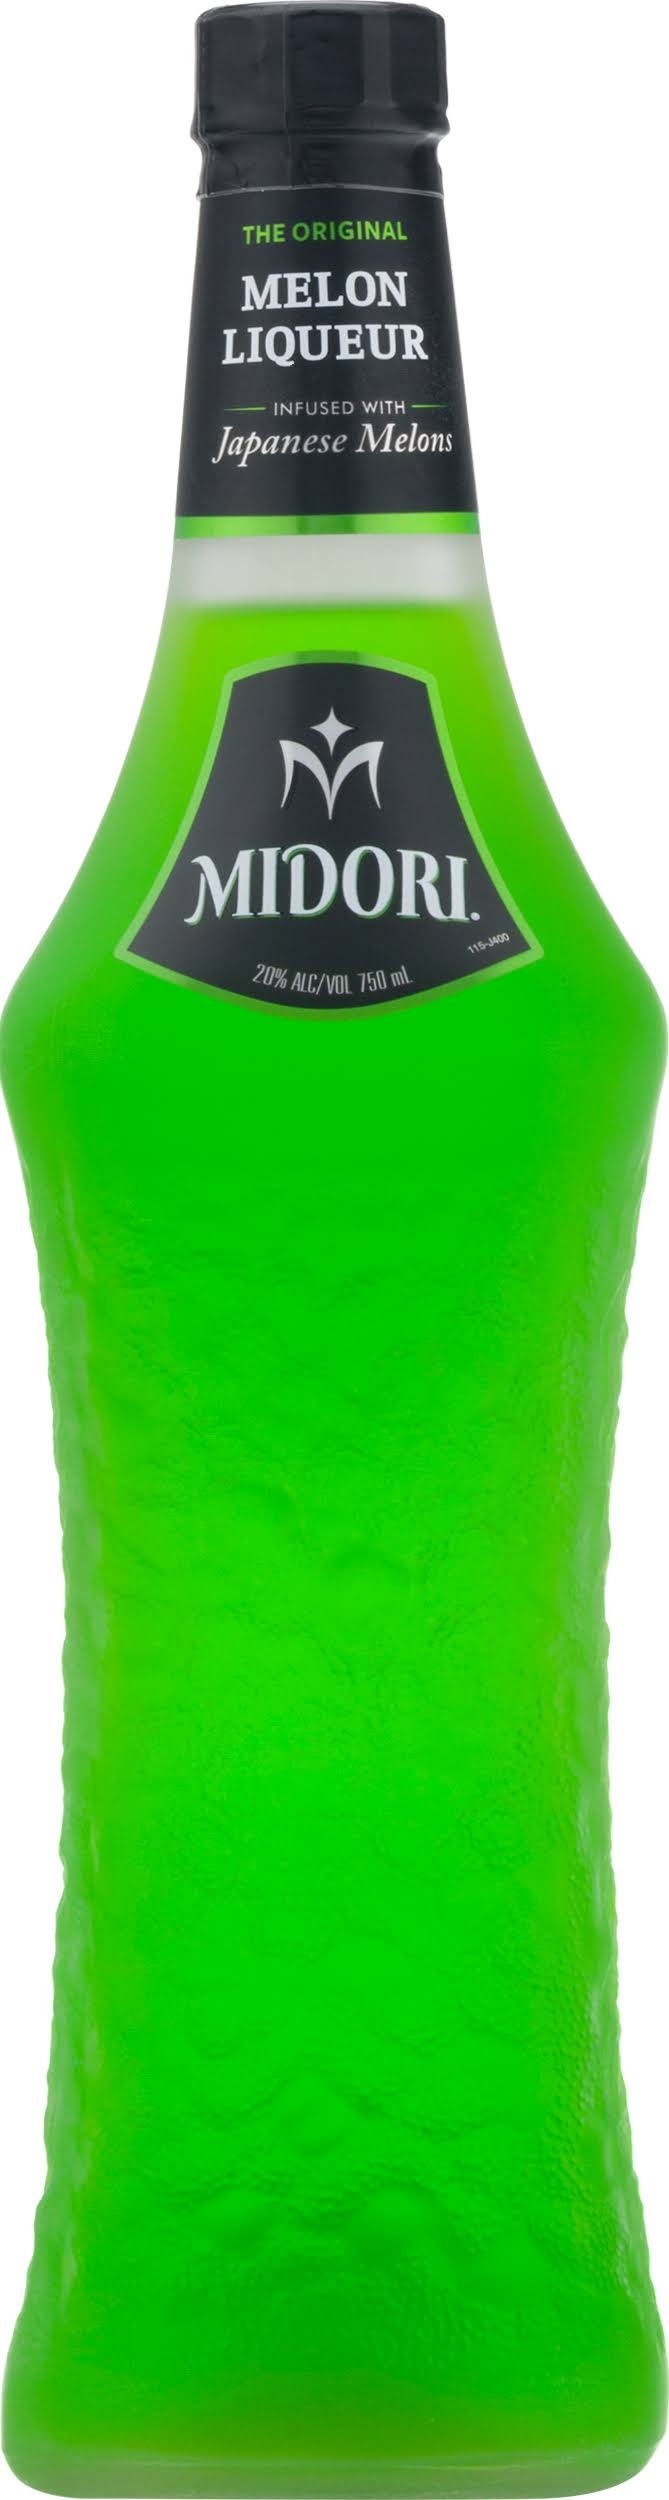 Midori Melon Liqueur 750ml Bottle